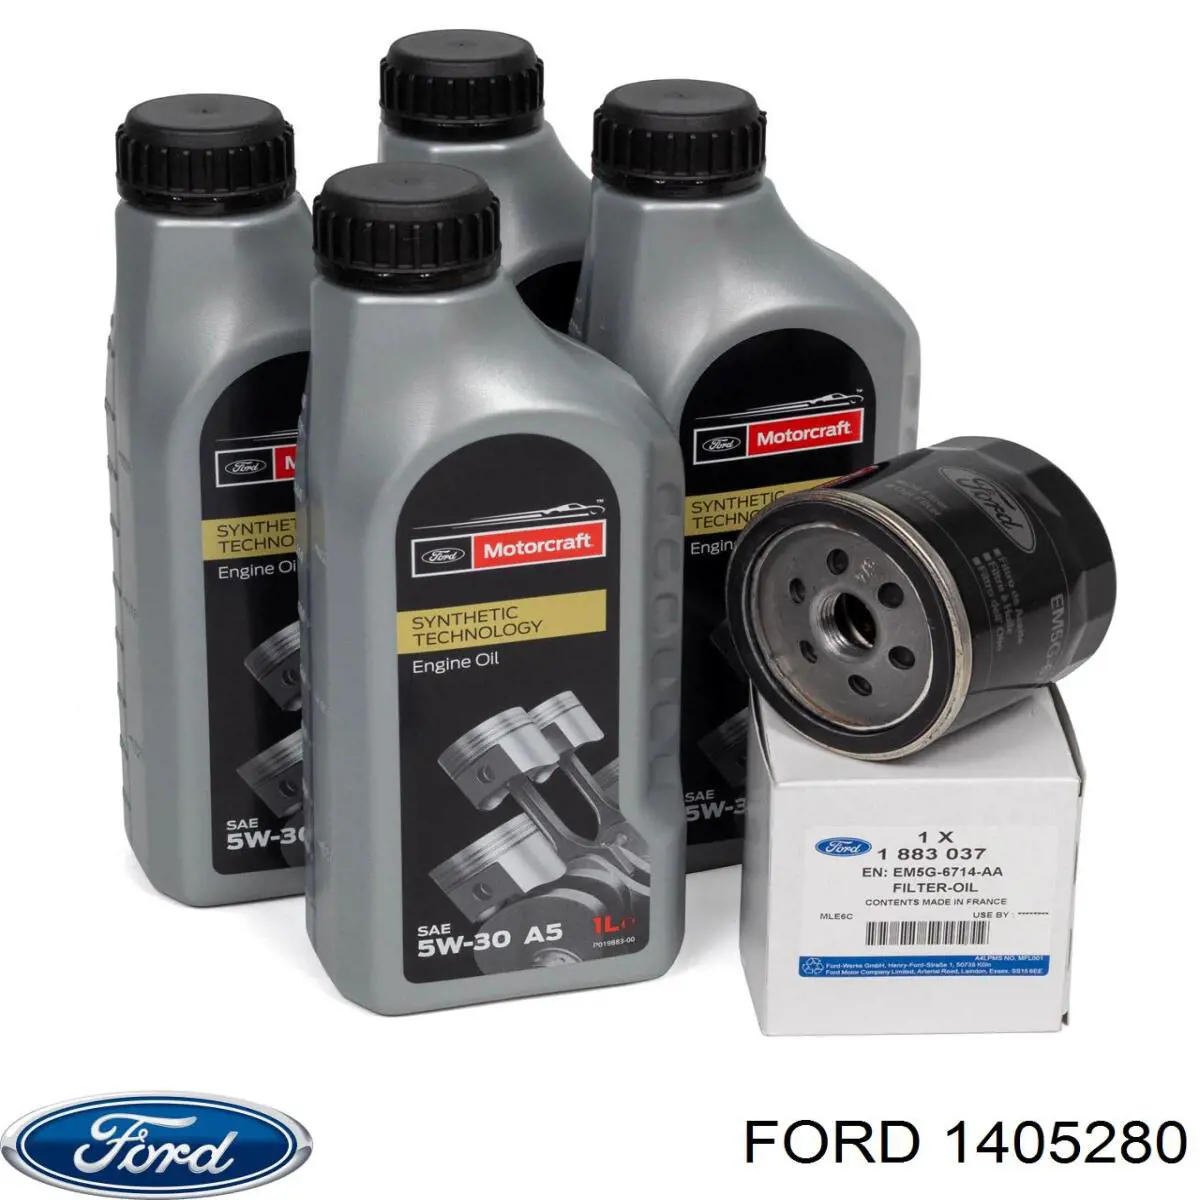 1405280 Ford filtro de aceite